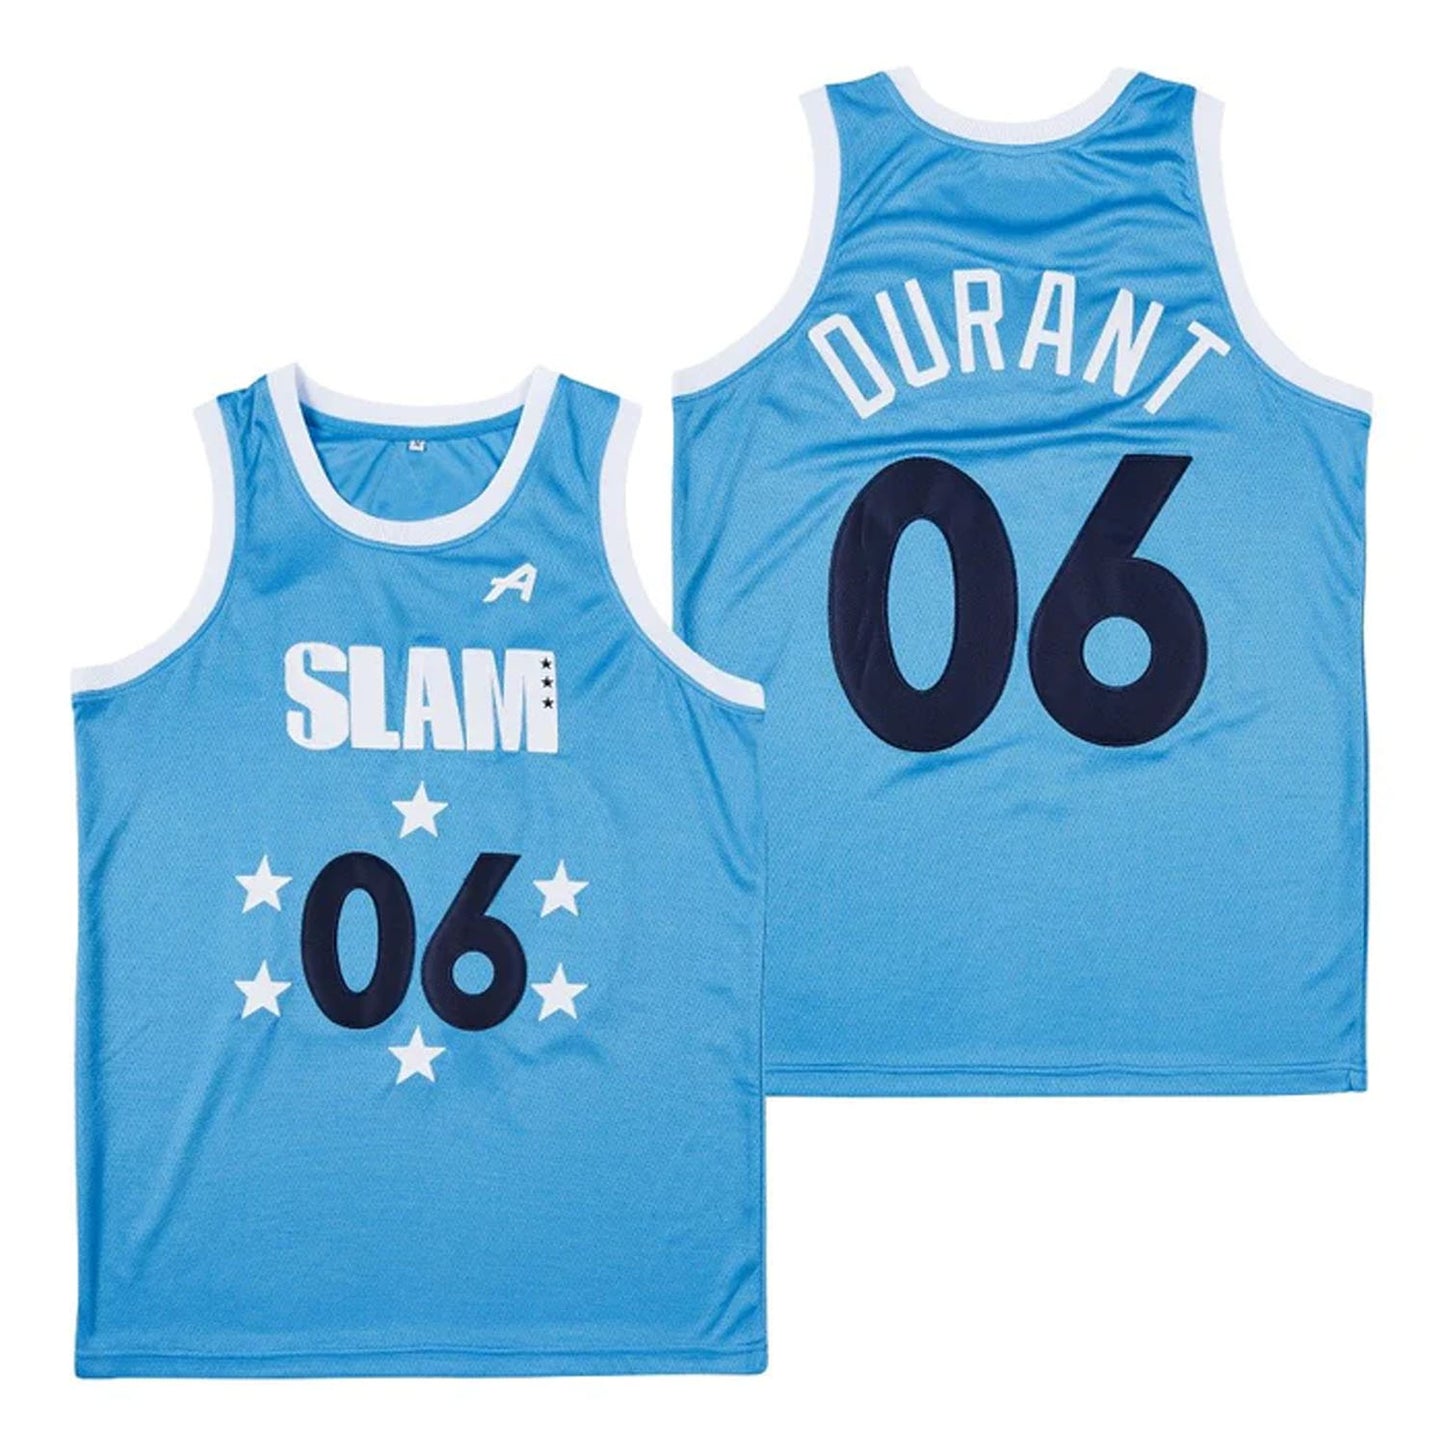 Kevin Durant #06 Slam Magazine Jersey